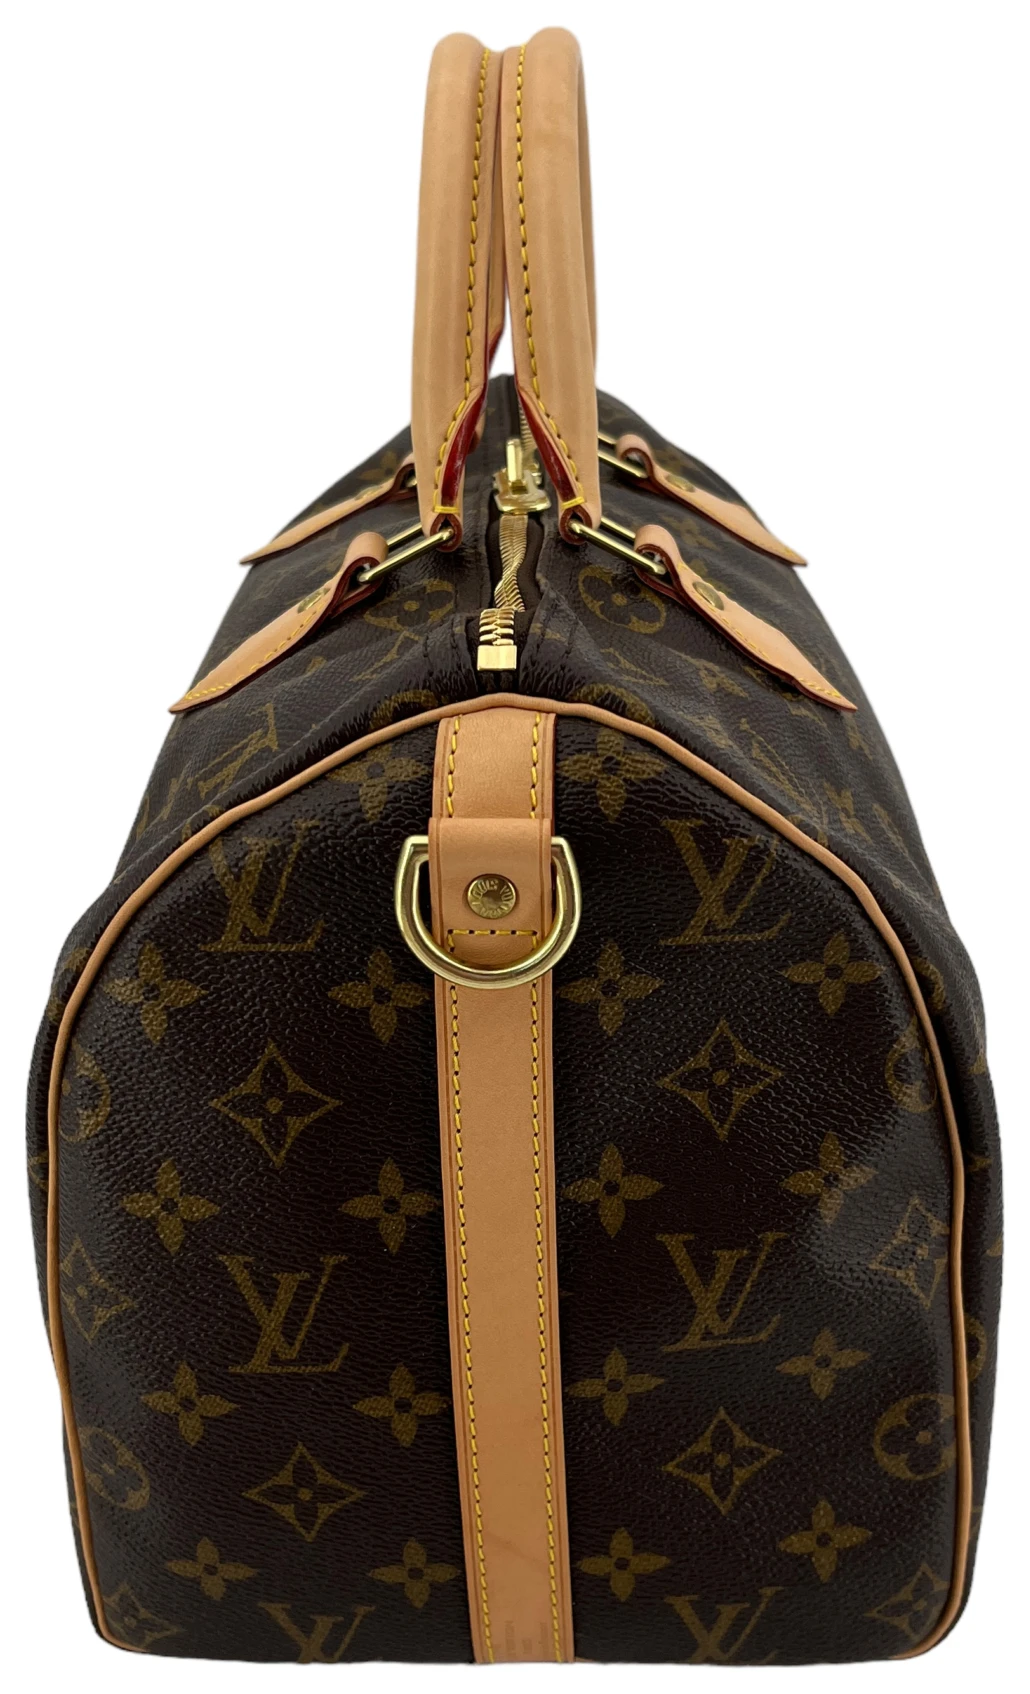 Louis Vuitton Speedy Bandouliere Bag Limited Edition Nautical Damier 25